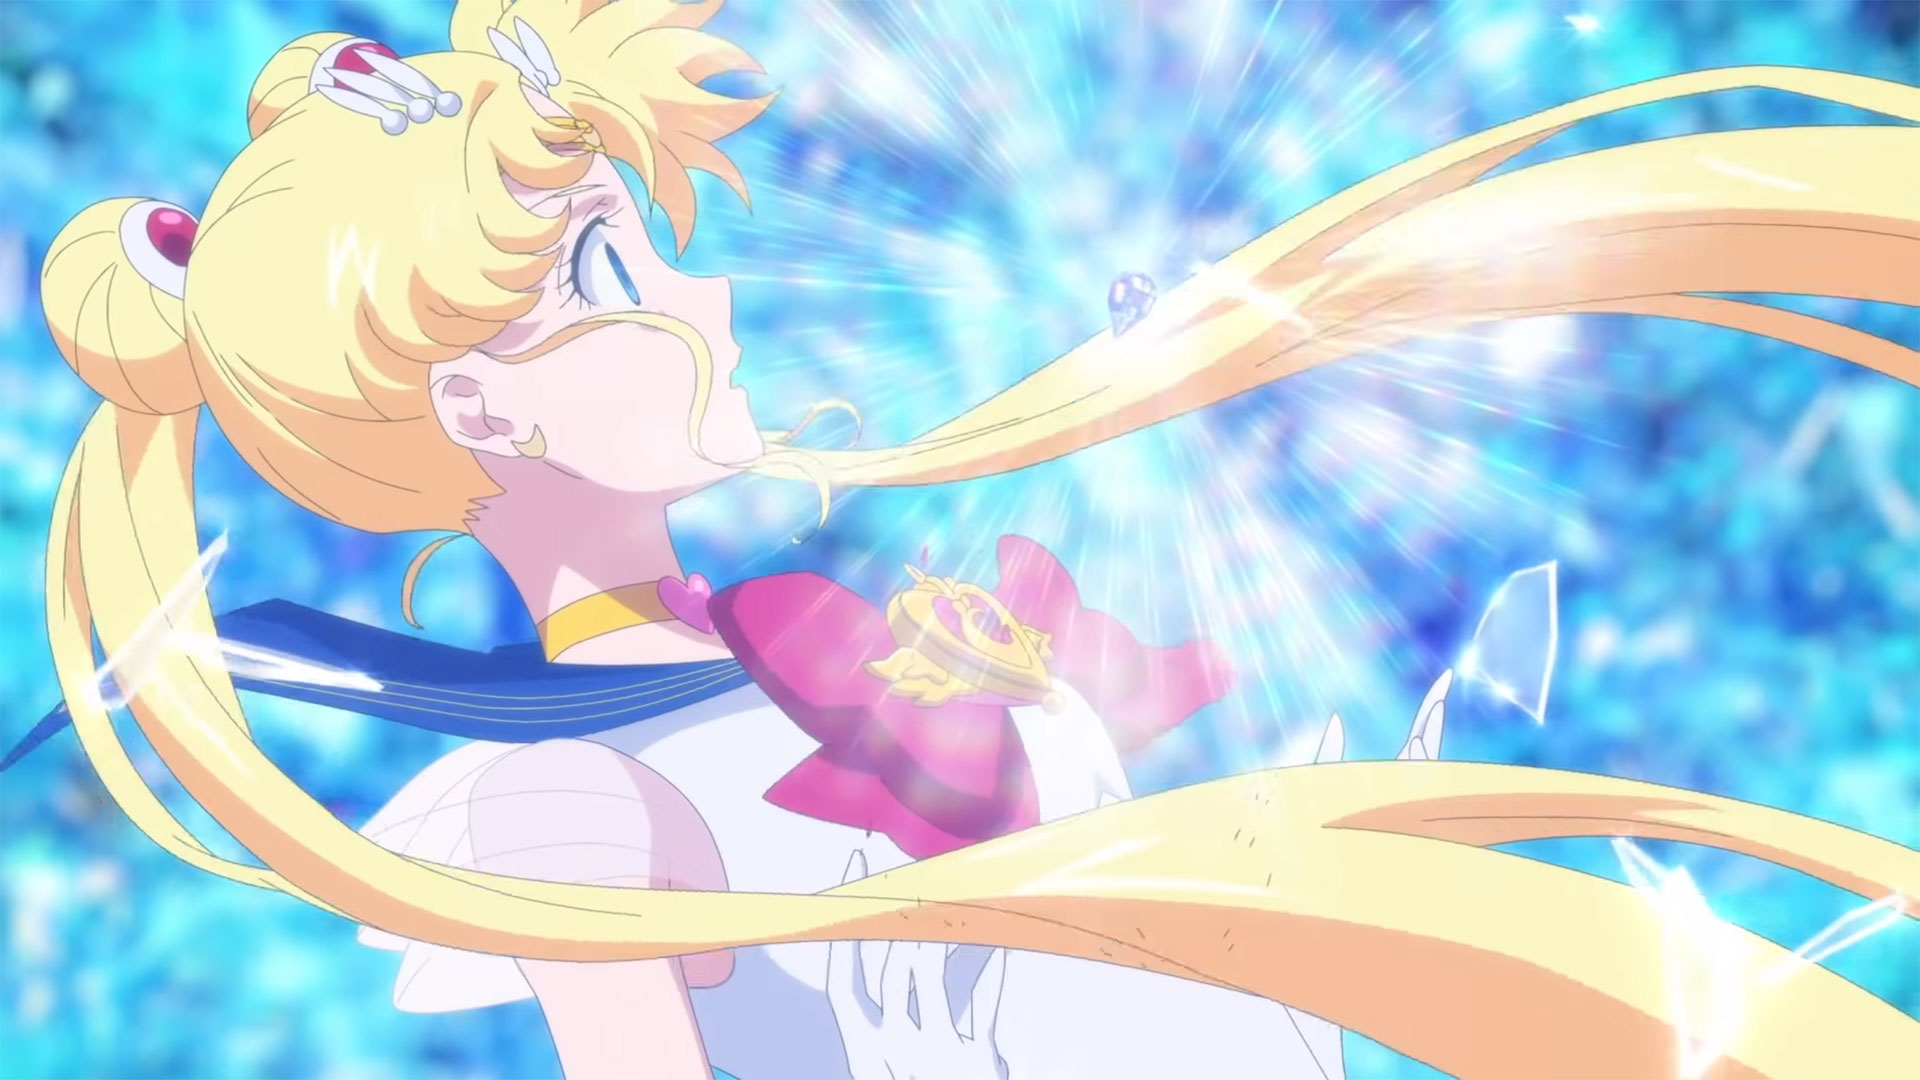 Pretty Guardian Sailor Moon Eternal chega à Netflix